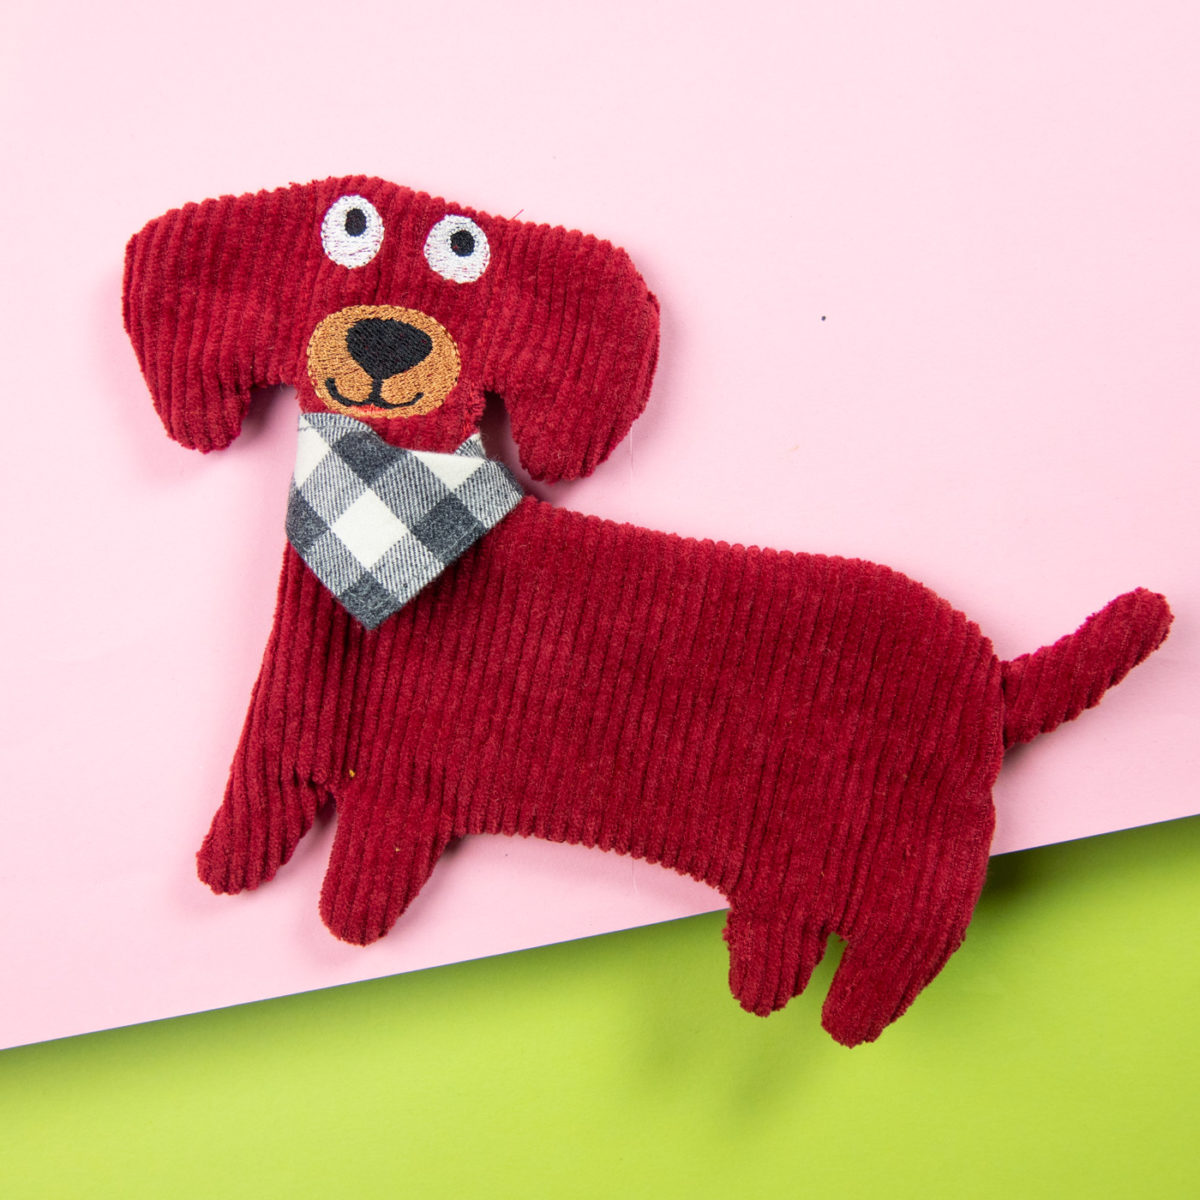 Hand warmer dachshund "Kurt" in red